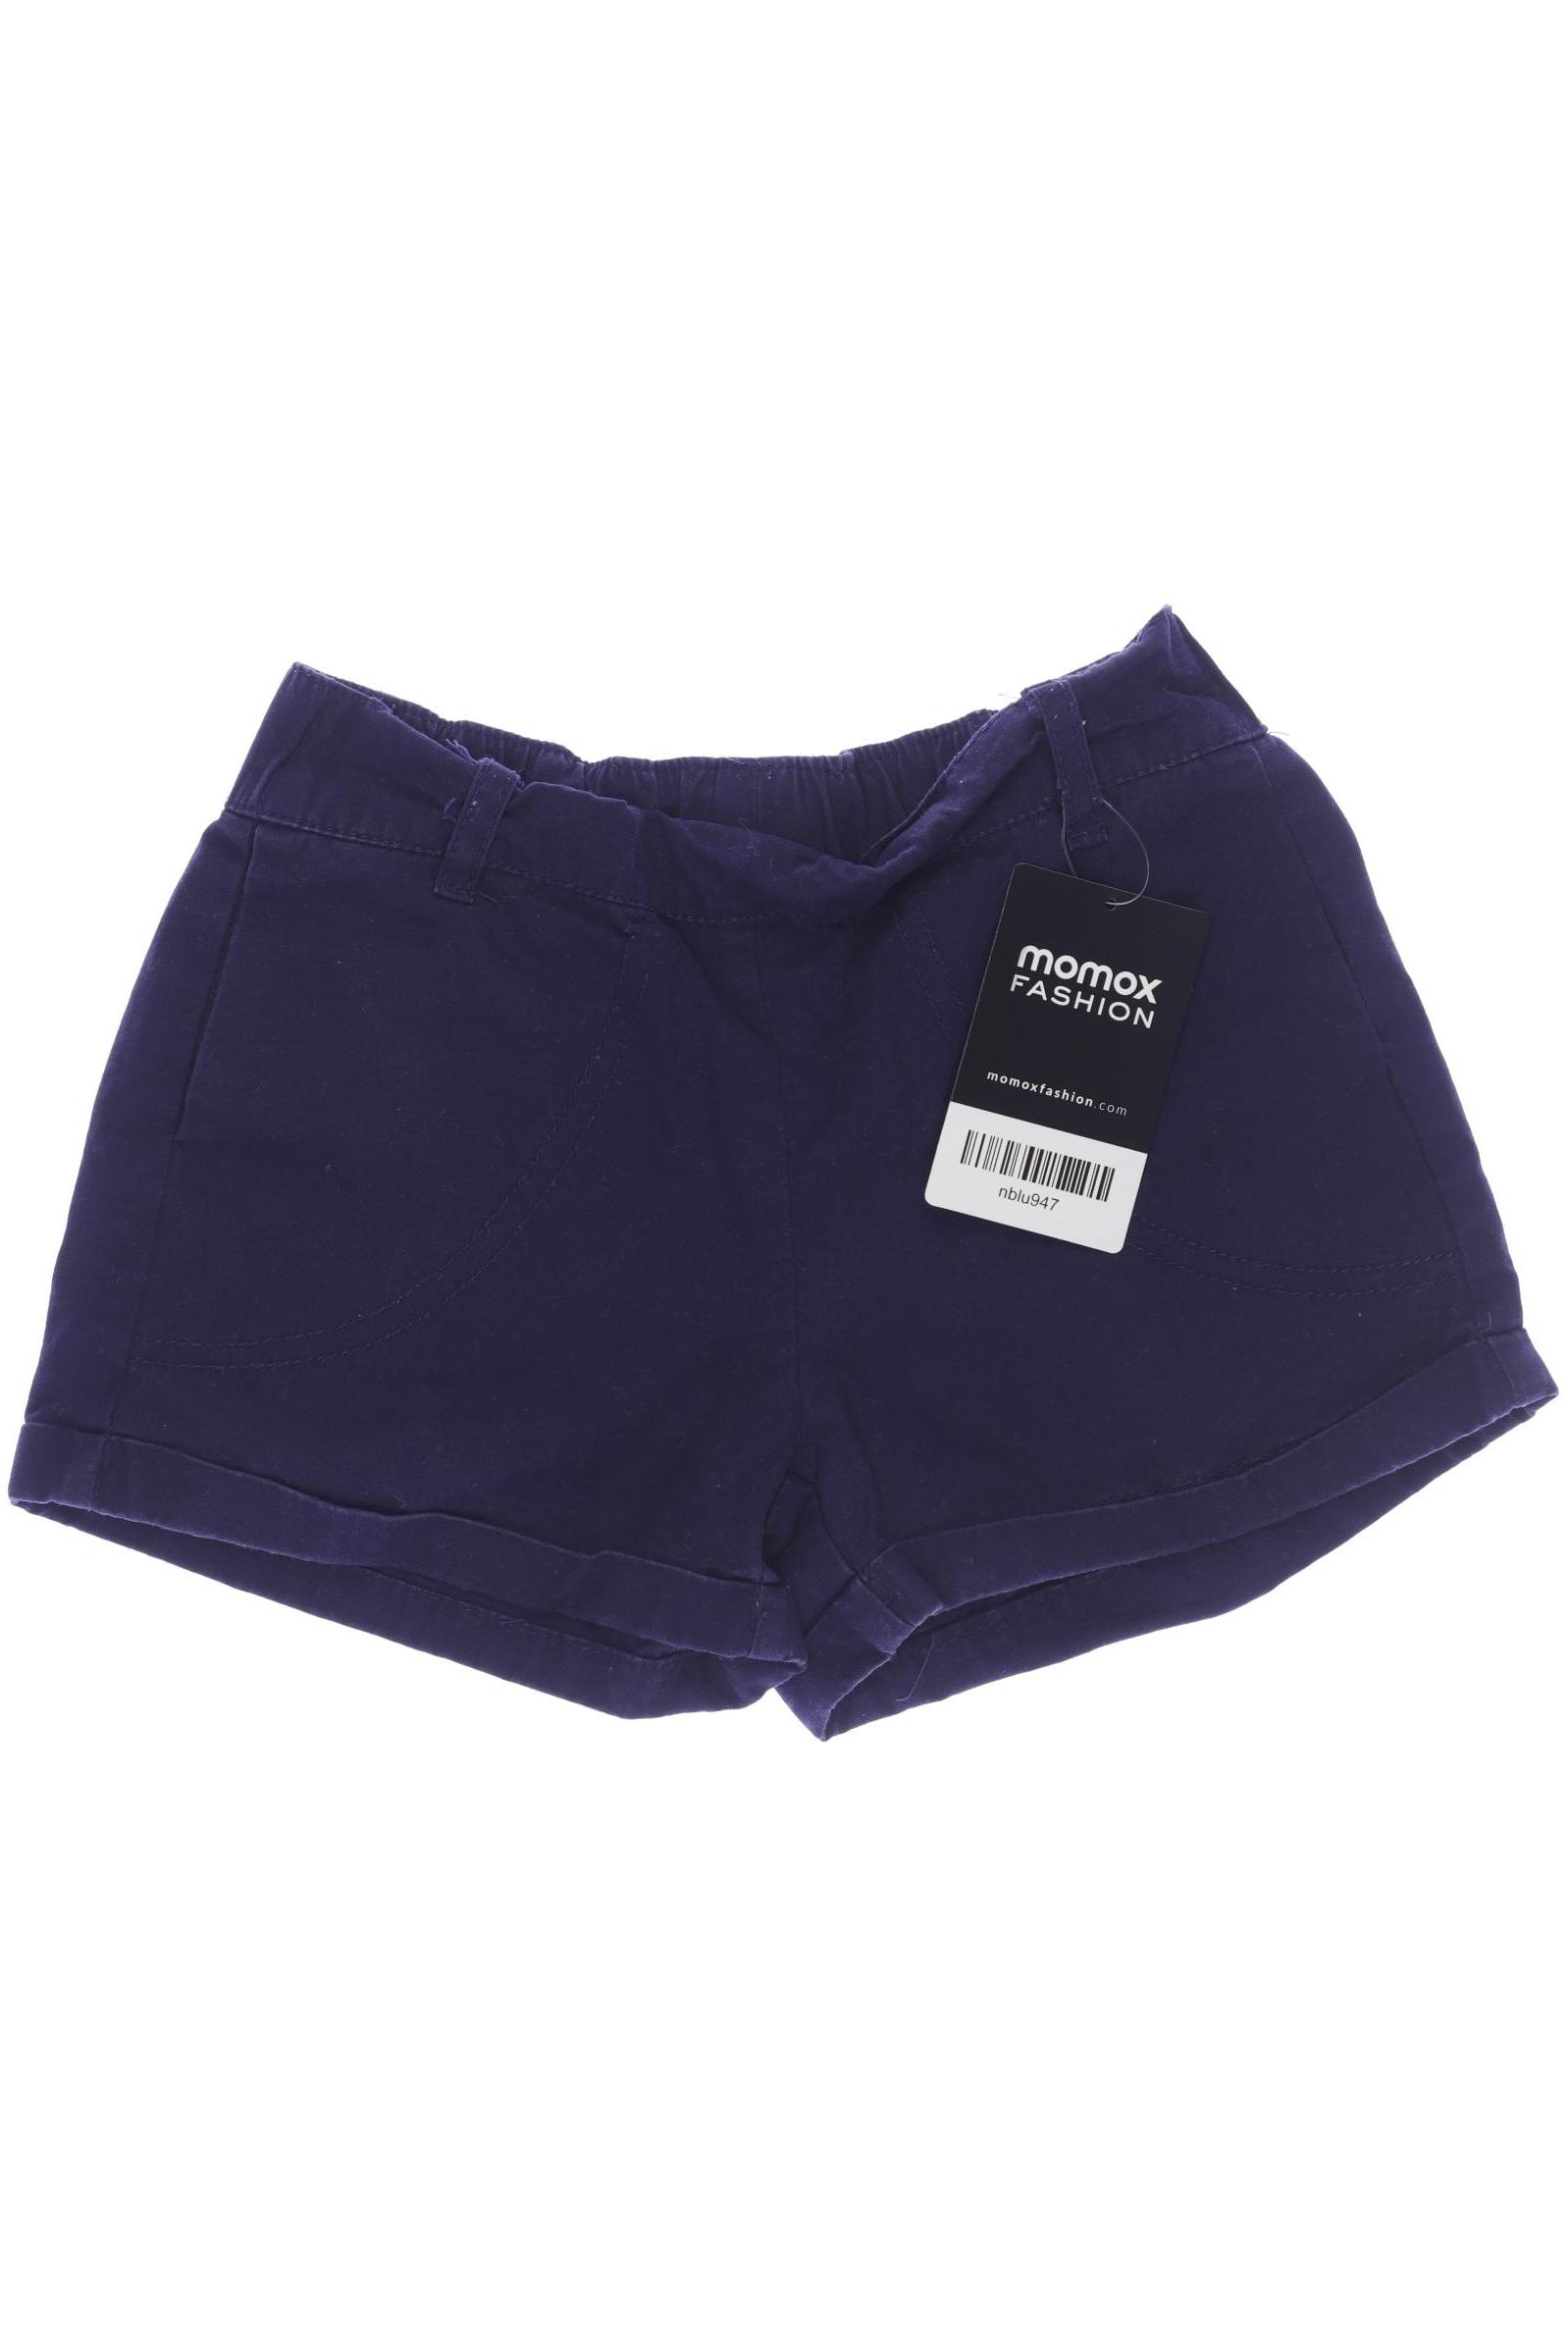 Topolino Damen Shorts, blau, Gr. 98 von Topolino